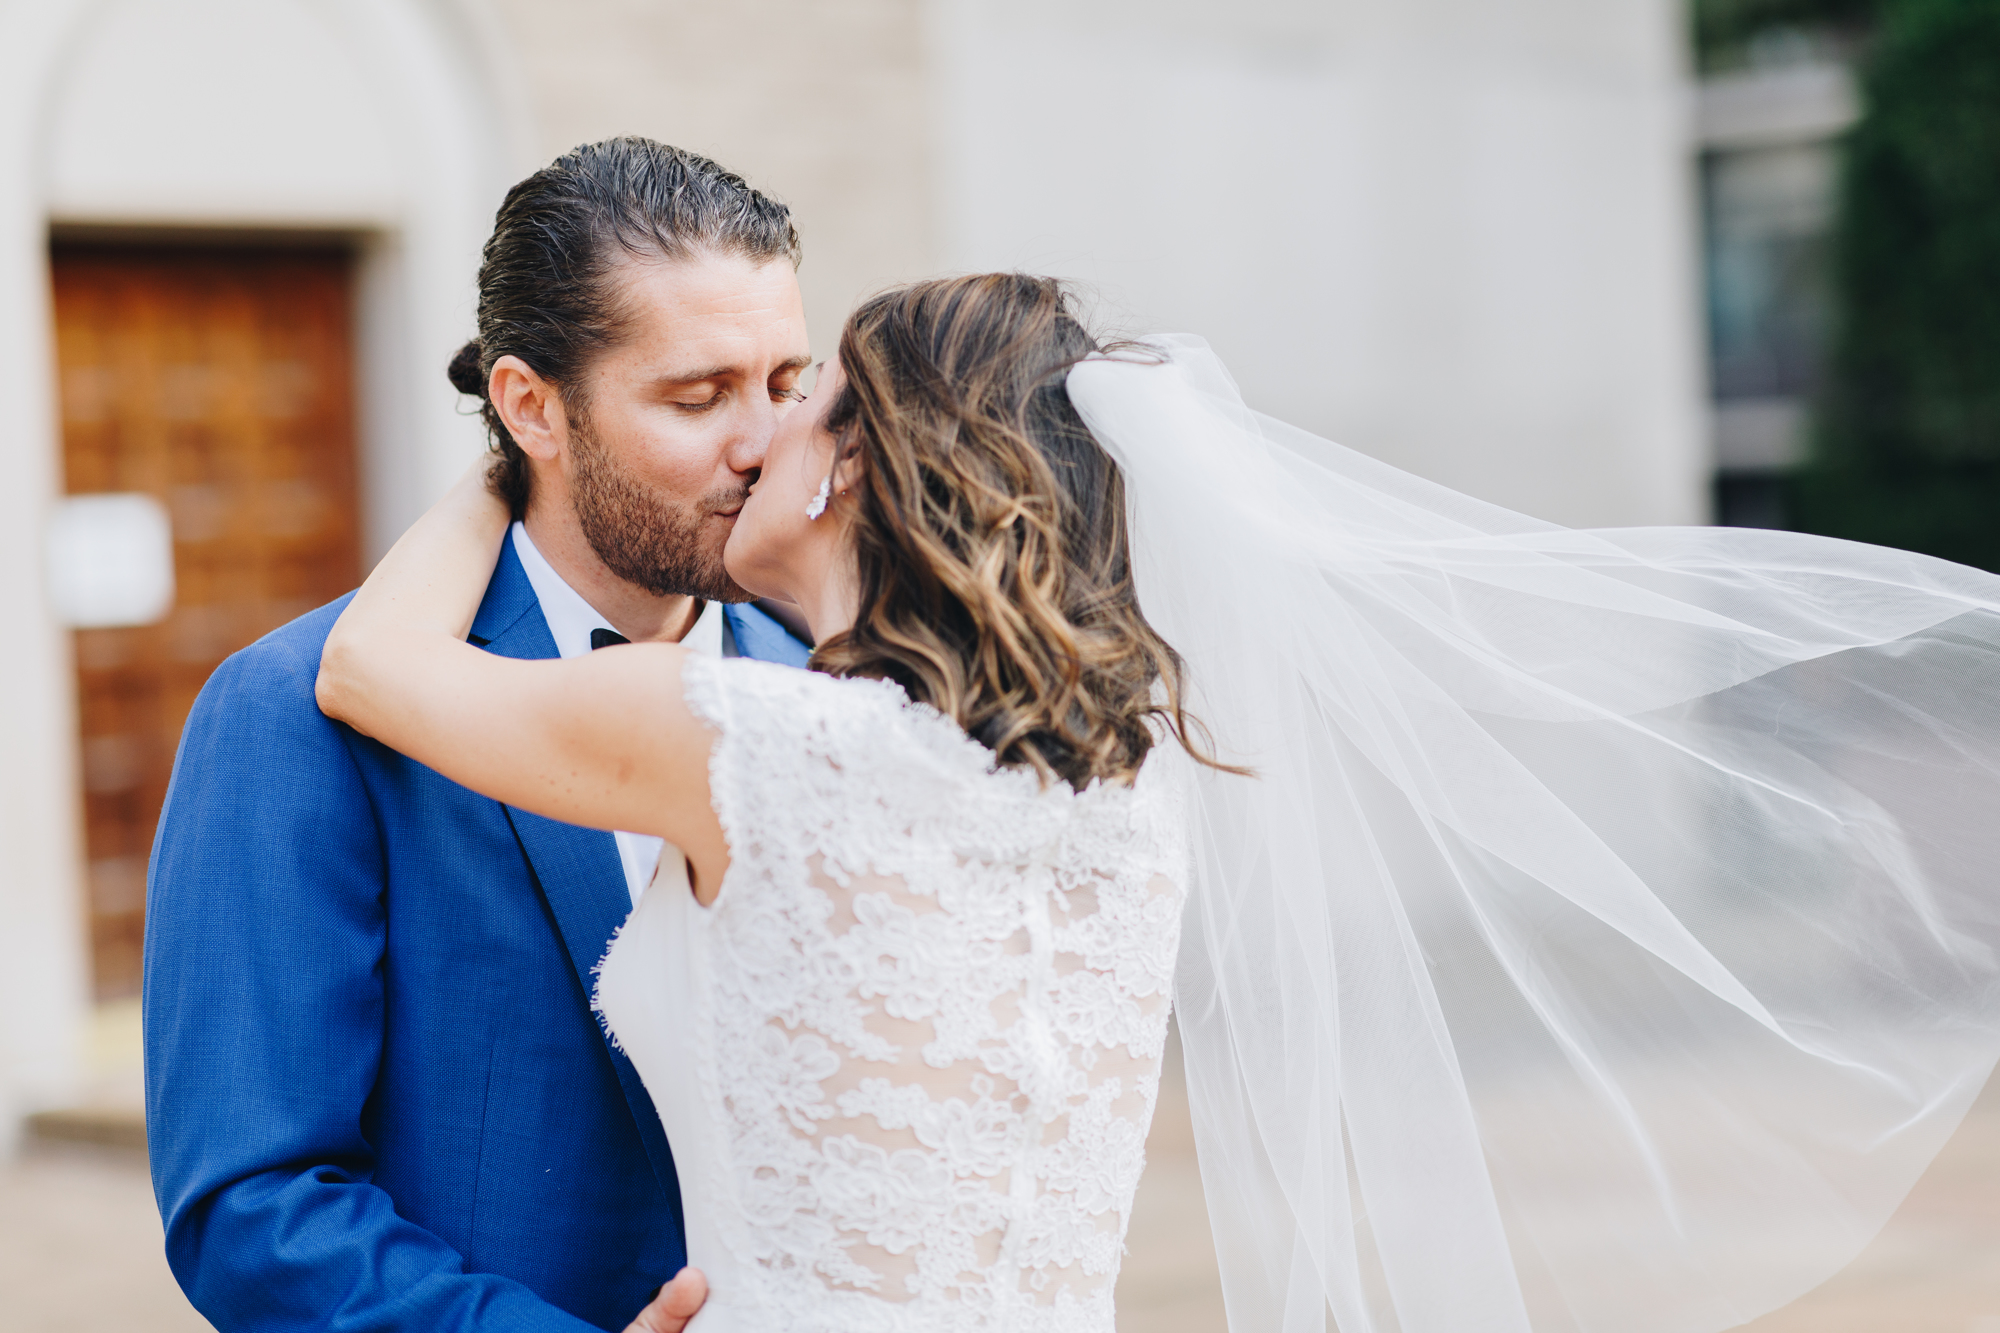 Candid beautiful Armenian wedding photos in New York